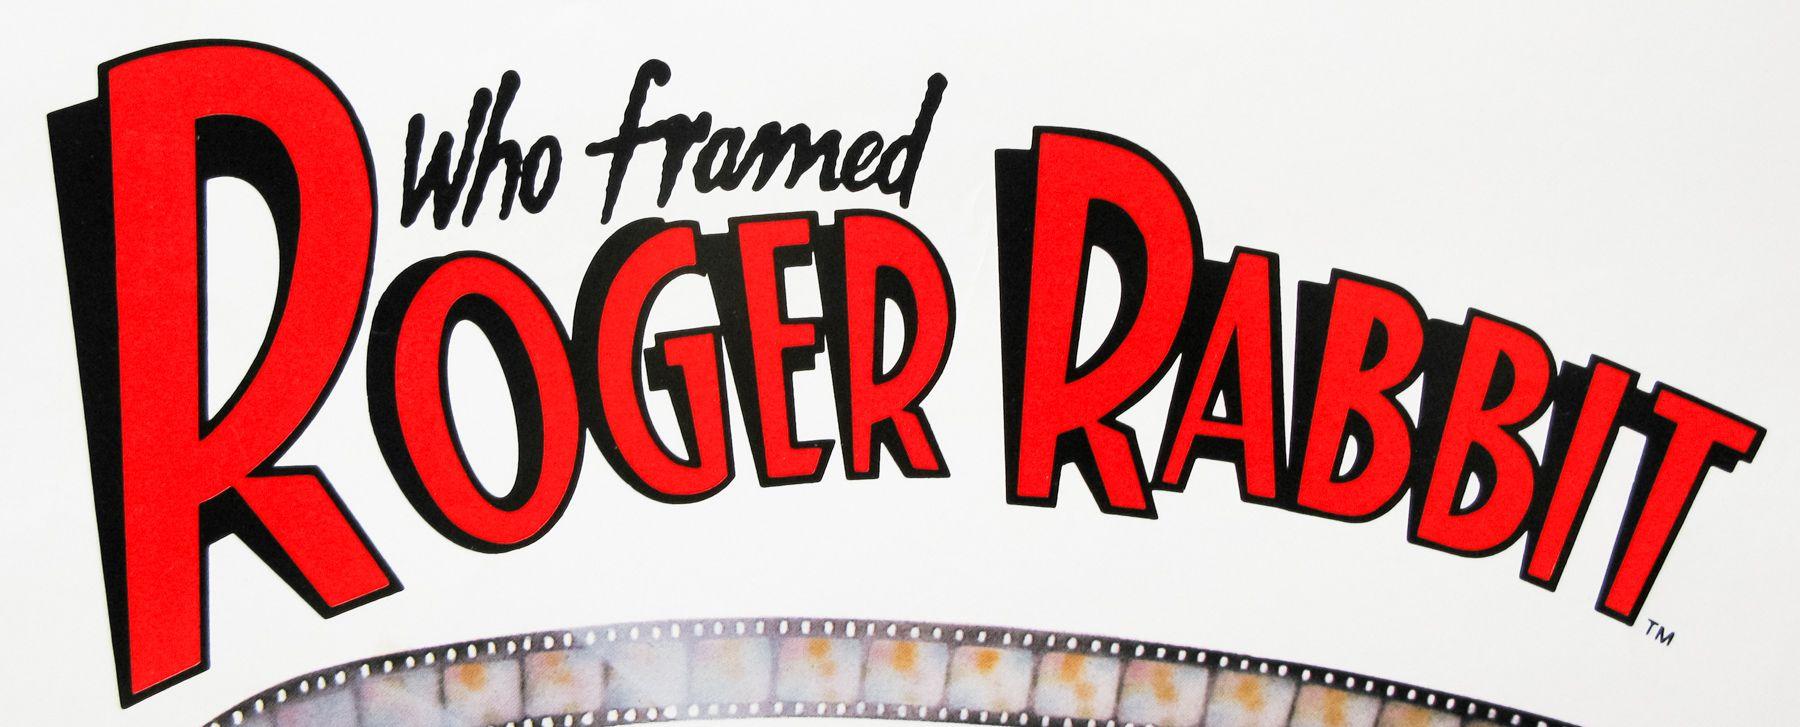 Jessica Rabbit Logo - Who Framed Roger Rabbit / one sheet / USA